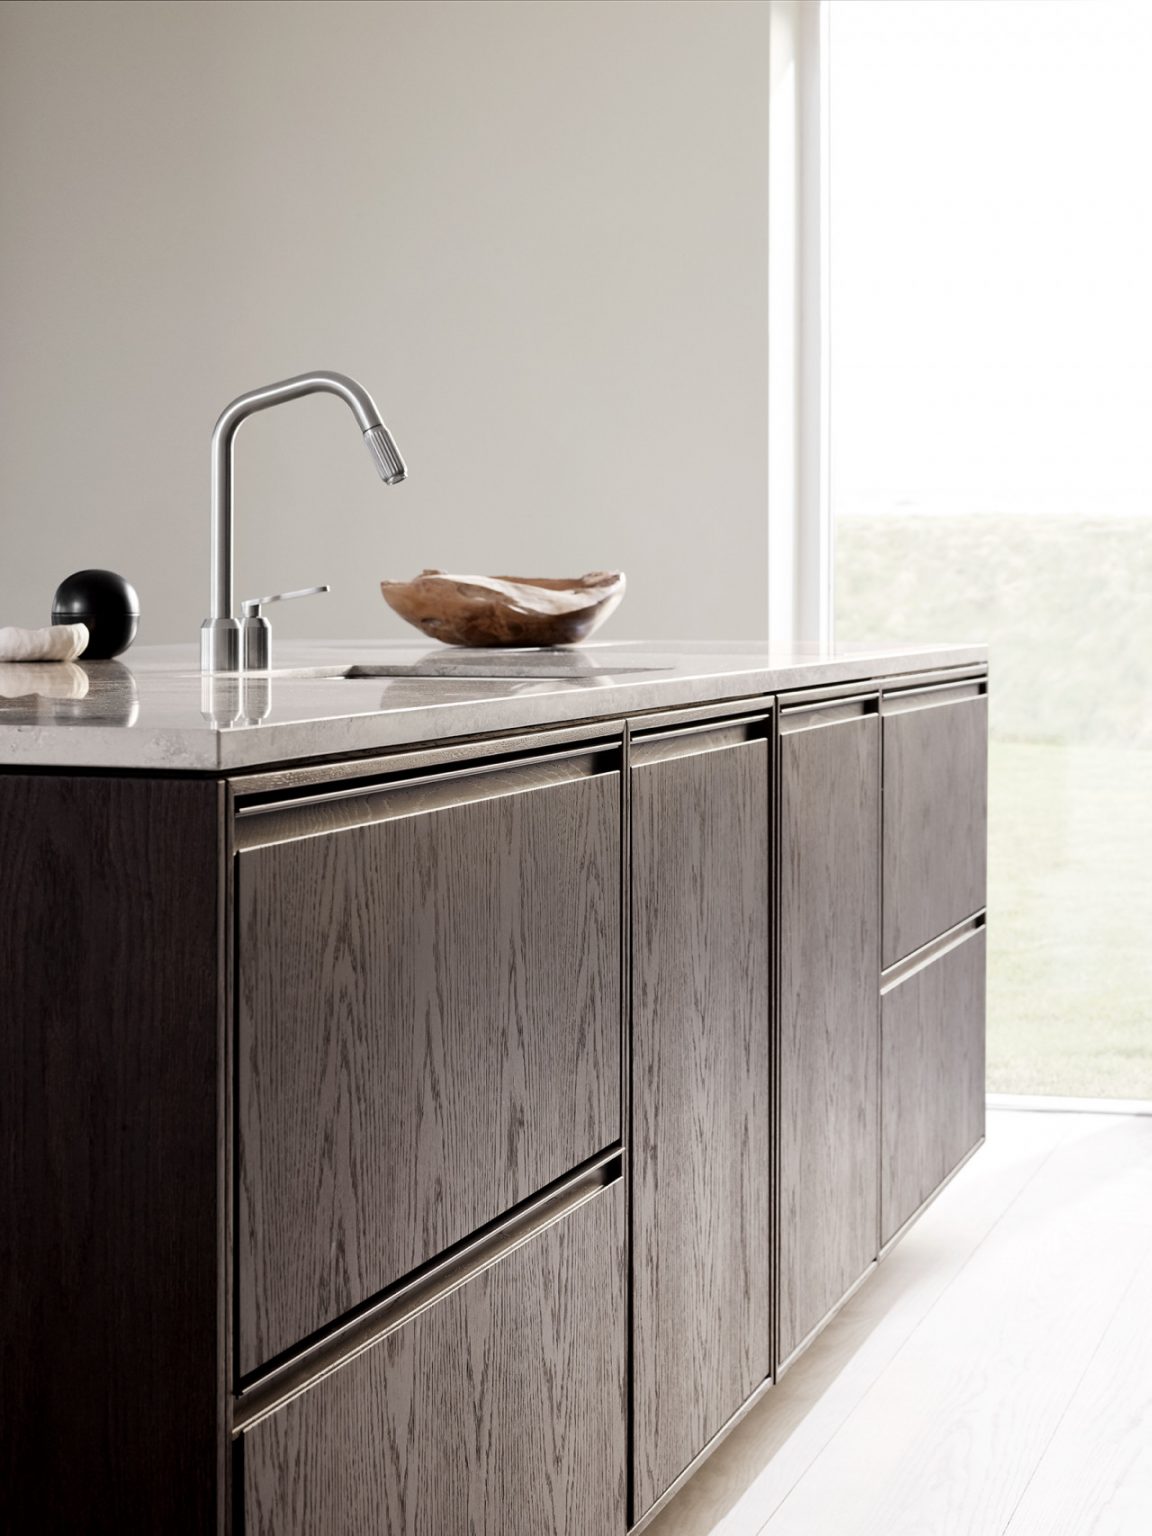 Vipp Highlights Jura Stone + Oak Wood in Its New V2 Kitchen